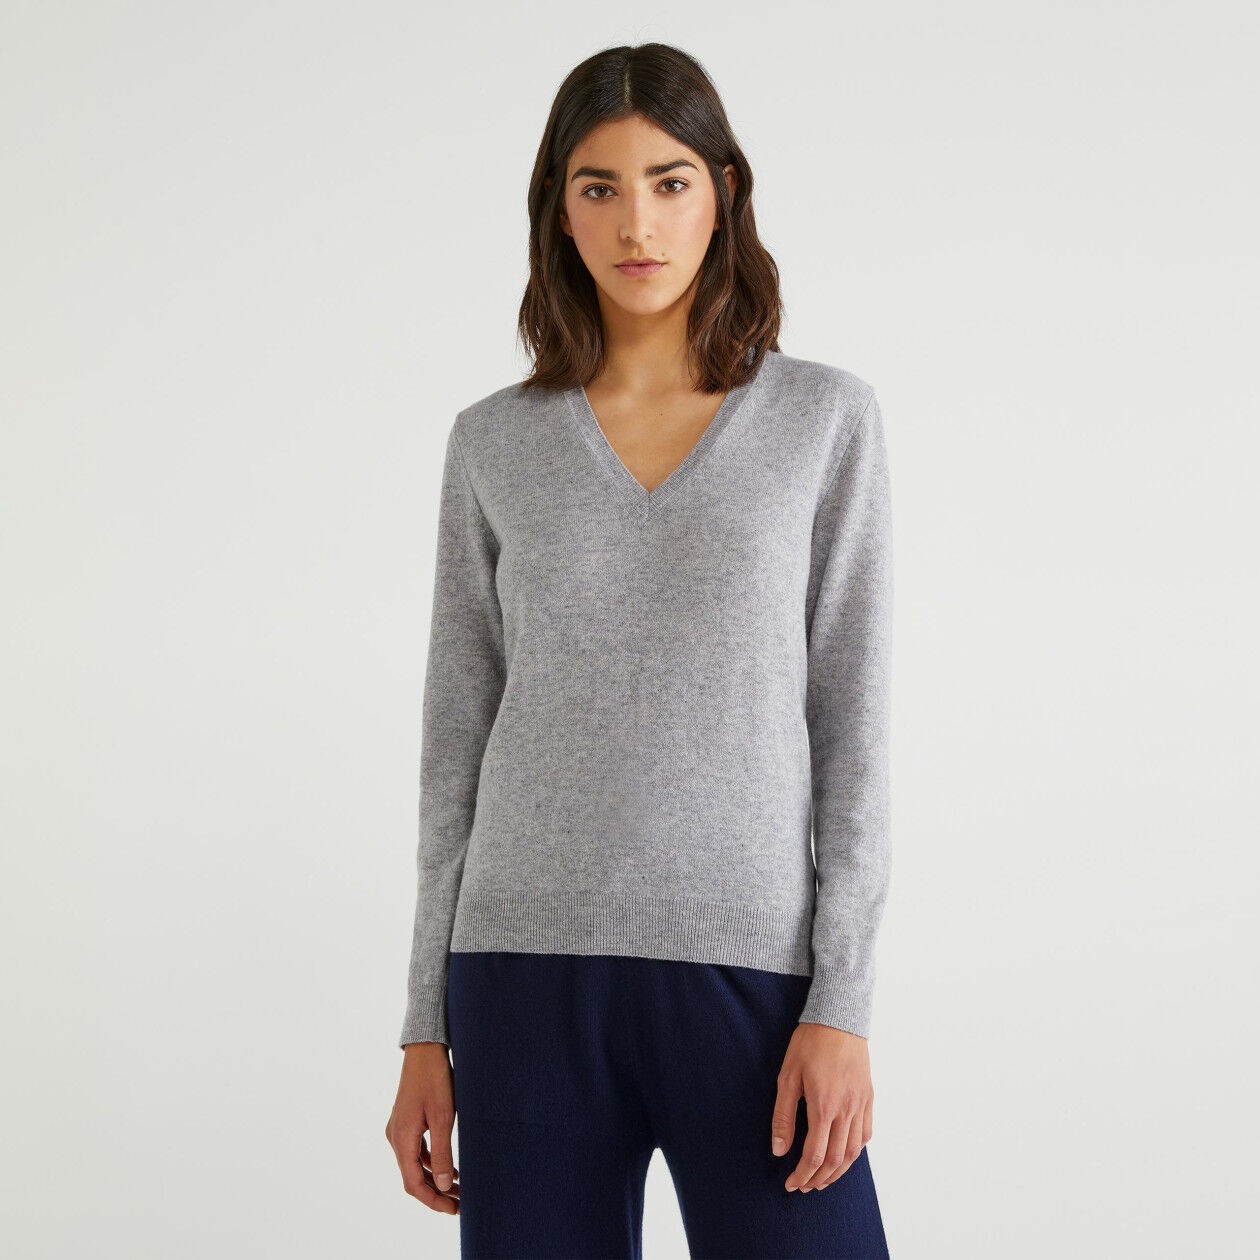 V-neck sweater in 100% virgin wool